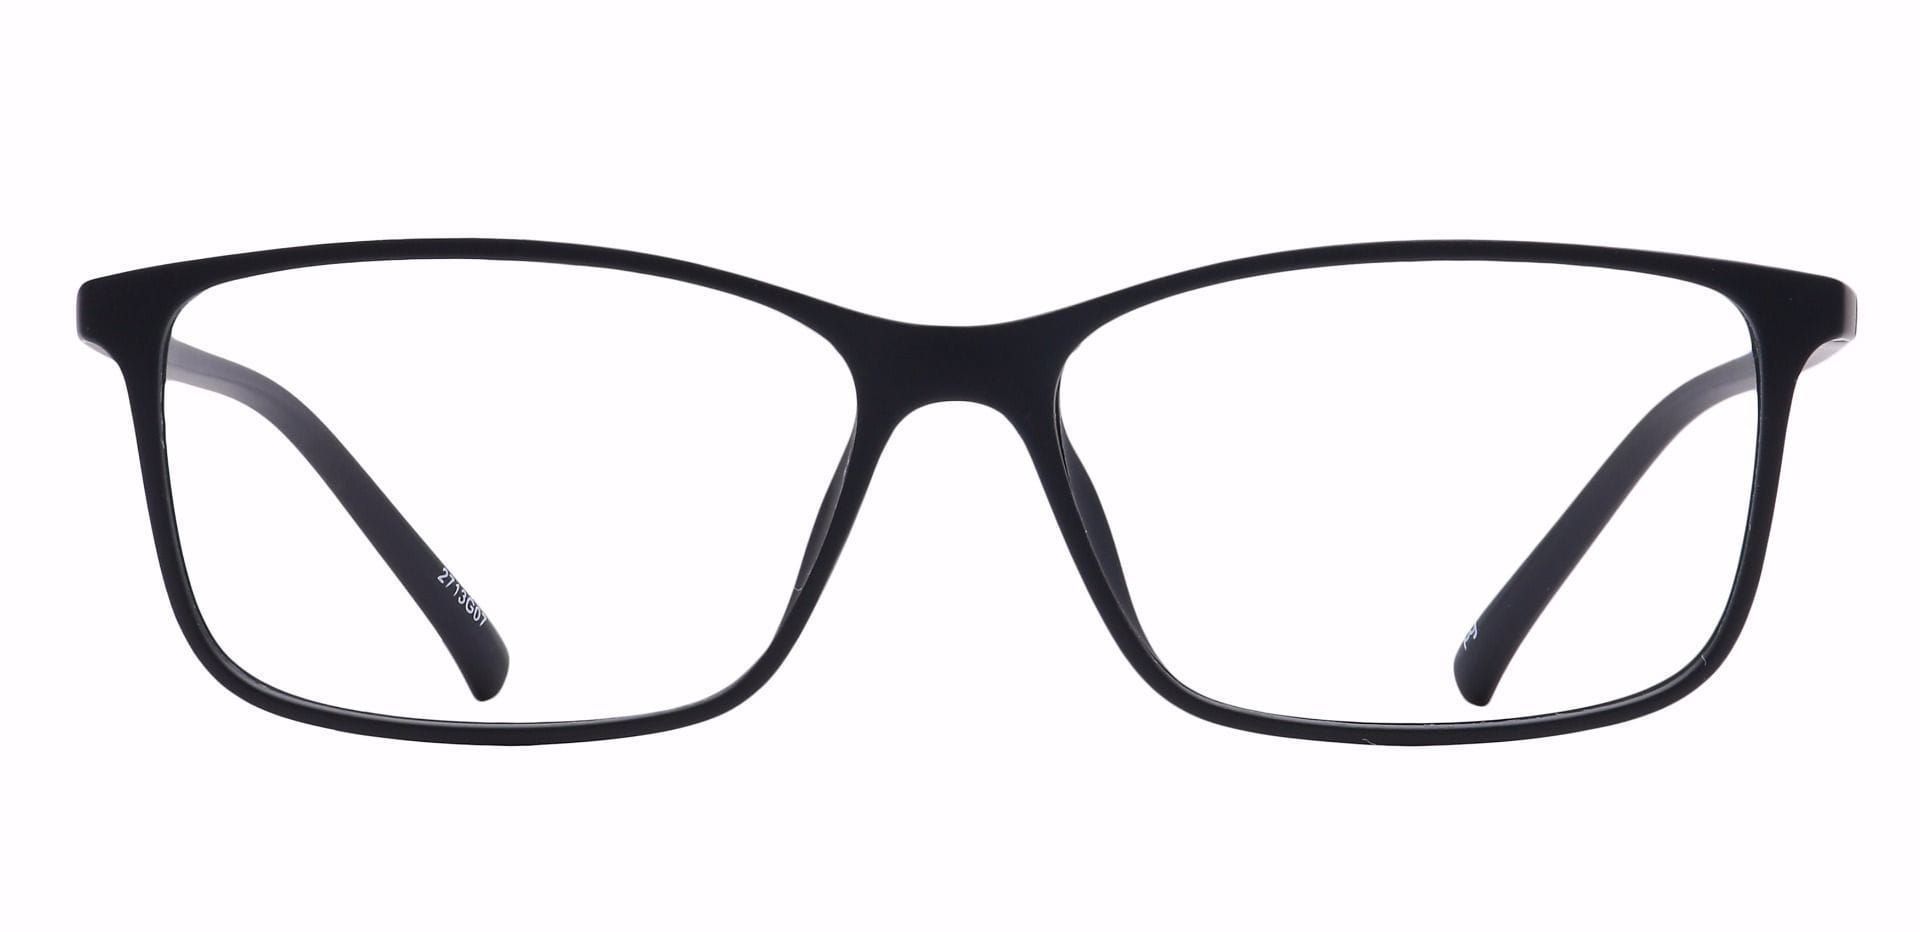 Pure Rectangle Eyeglasses Frame - Black